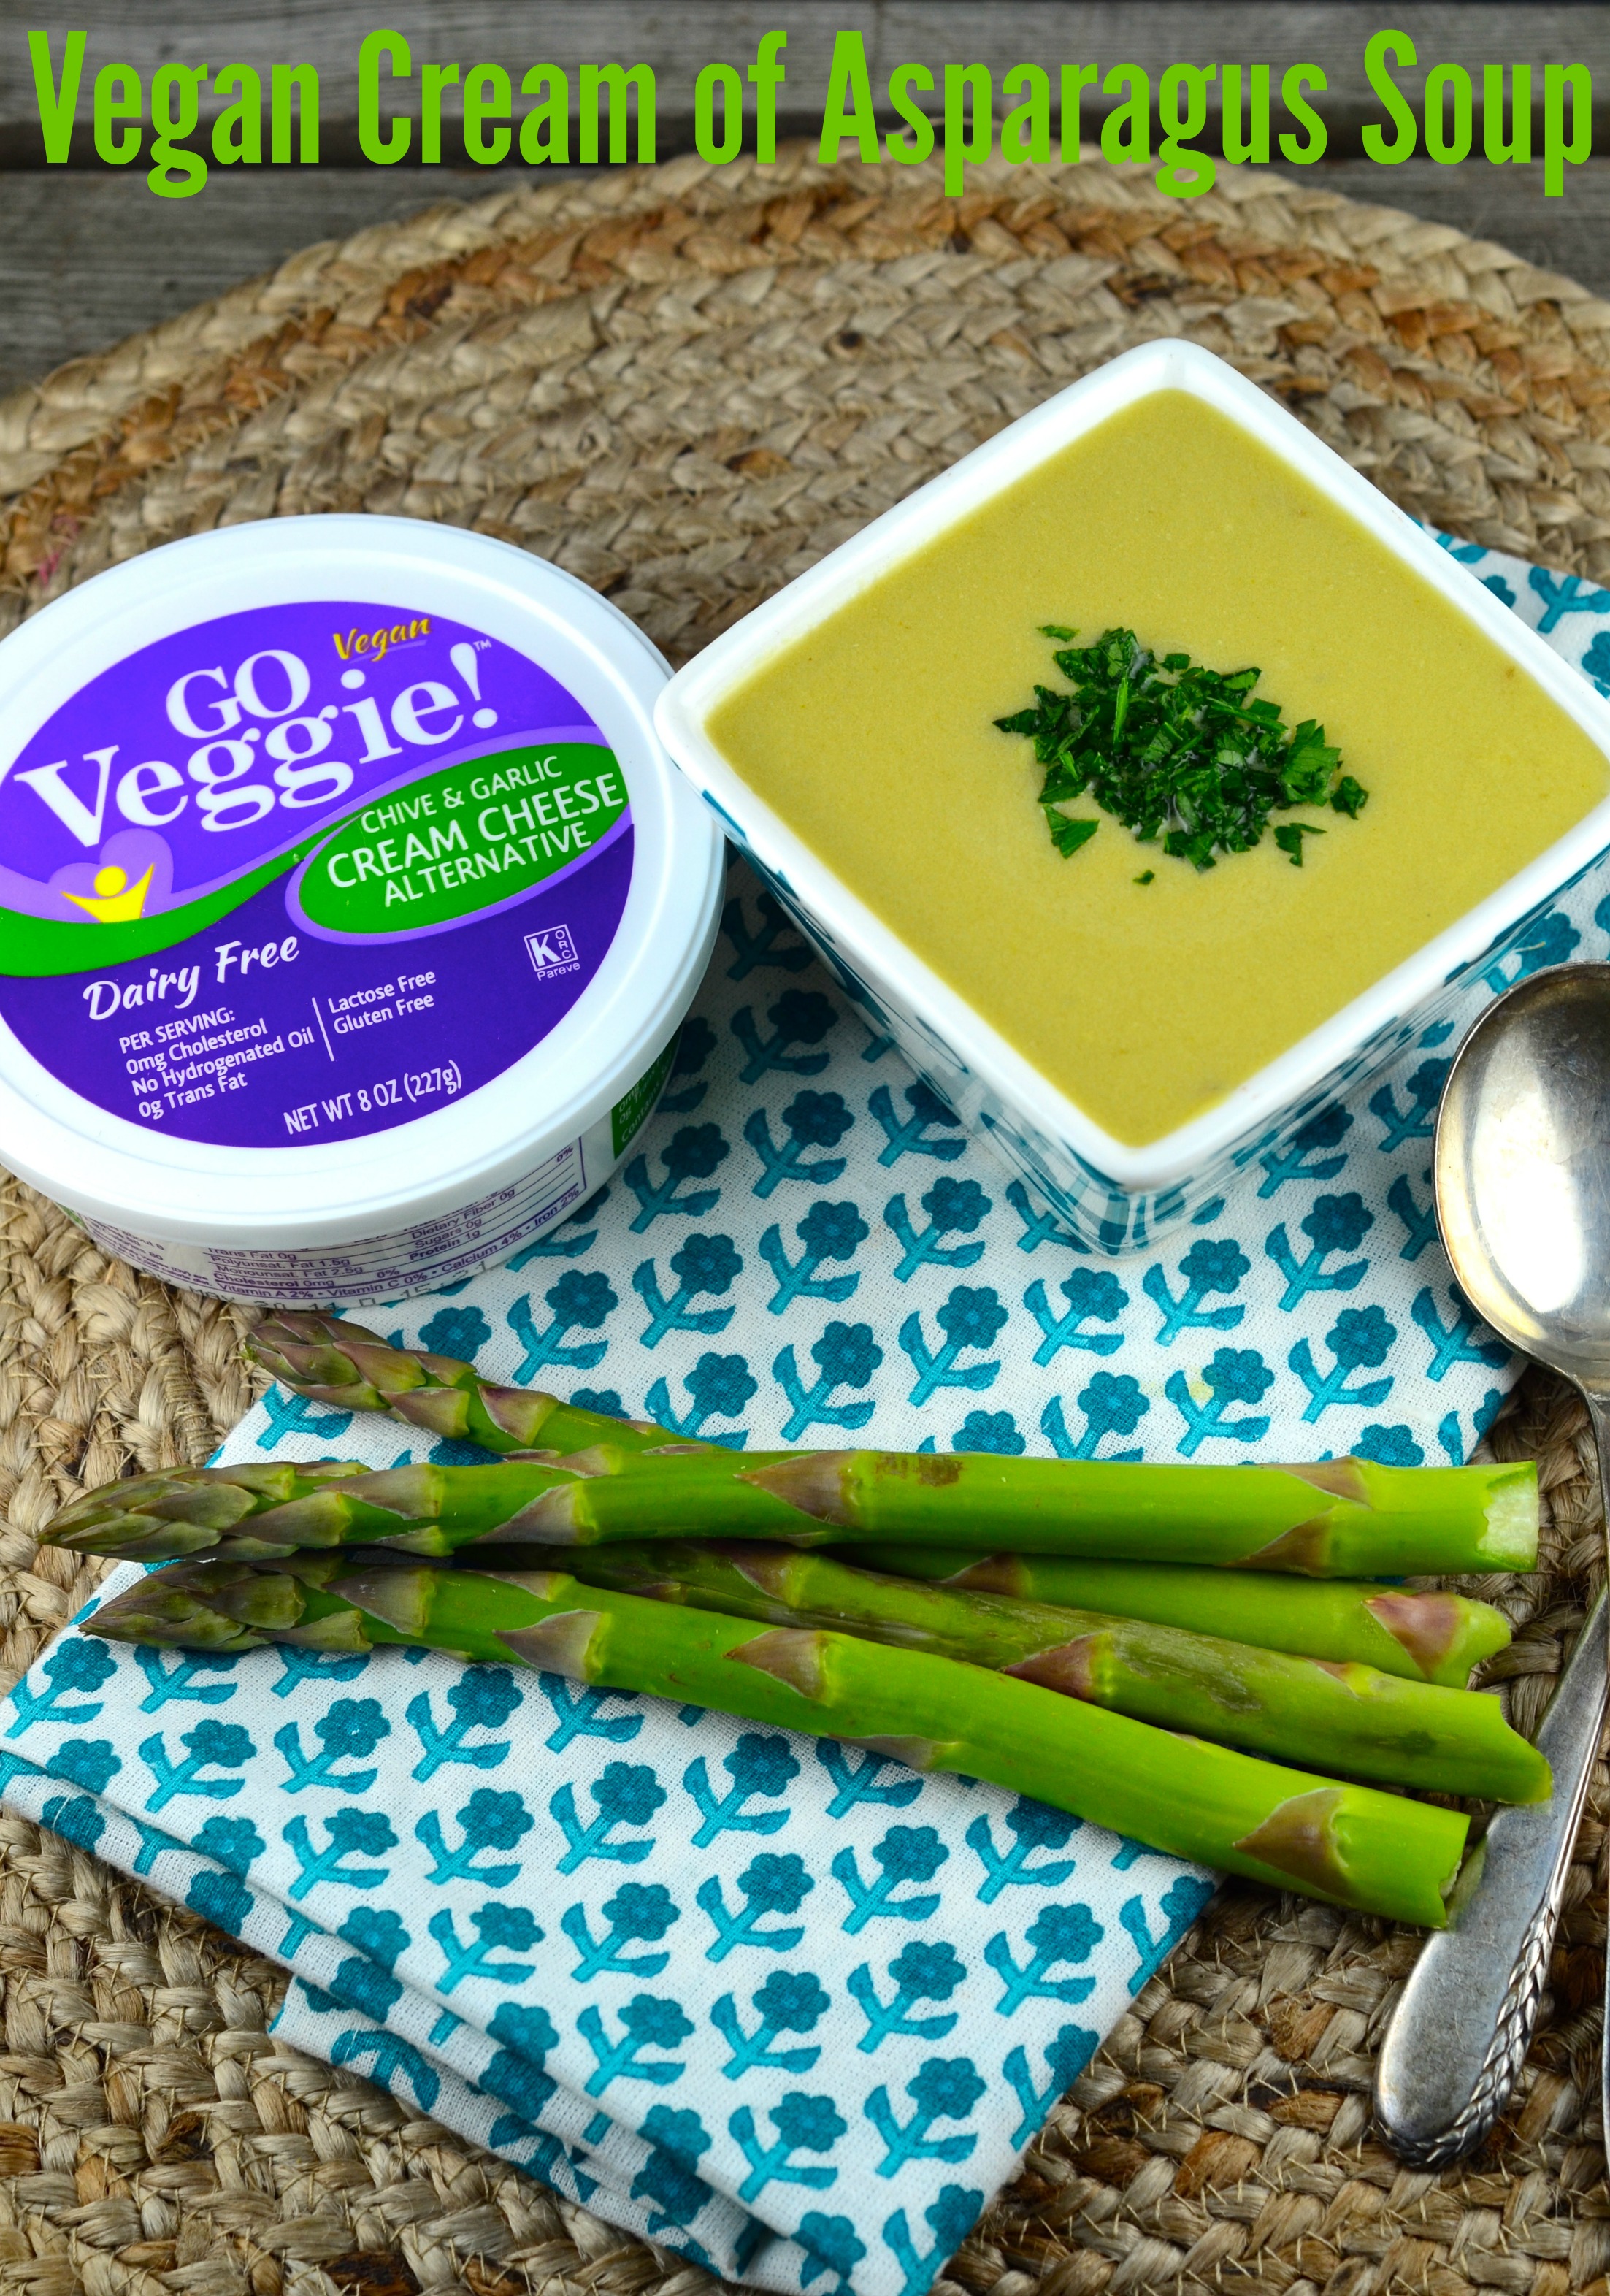 Vegan Cream of Asparagus Soup #soup #vegan #glutenFree #asparagus #kosher